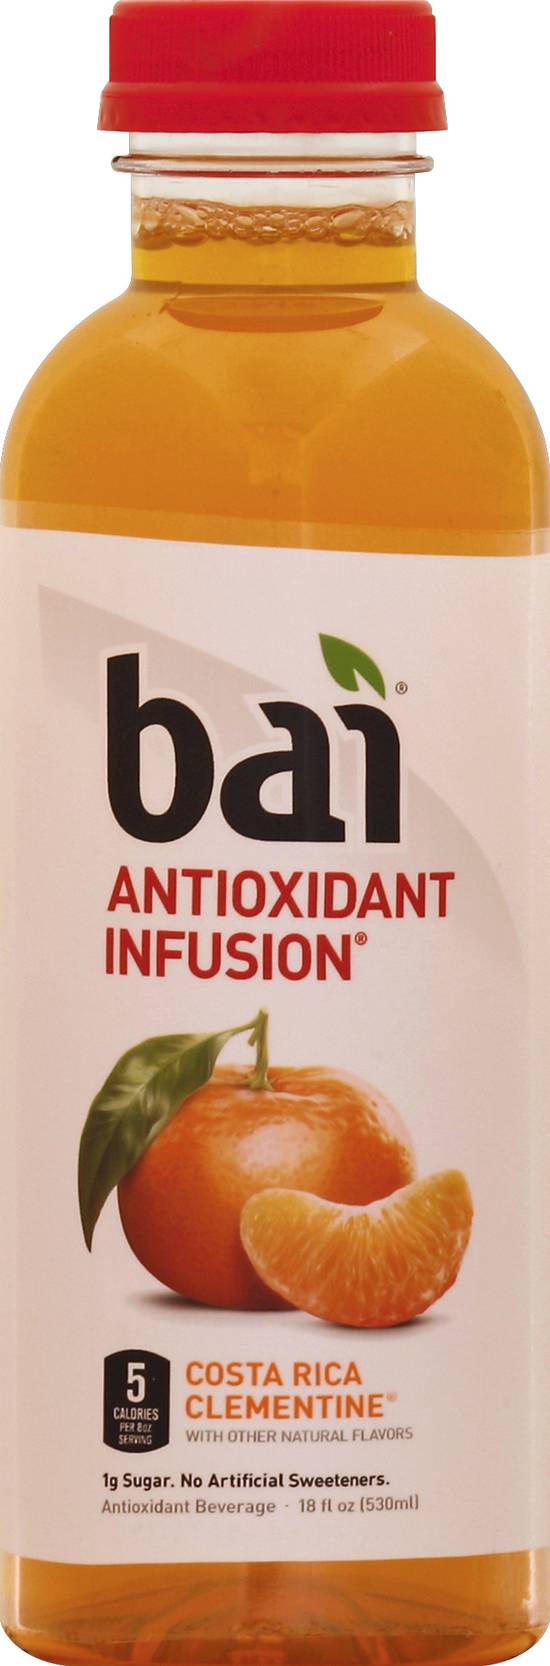 Bai Costa Rica Clementine Antioxidant Infusion (18 fl oz)